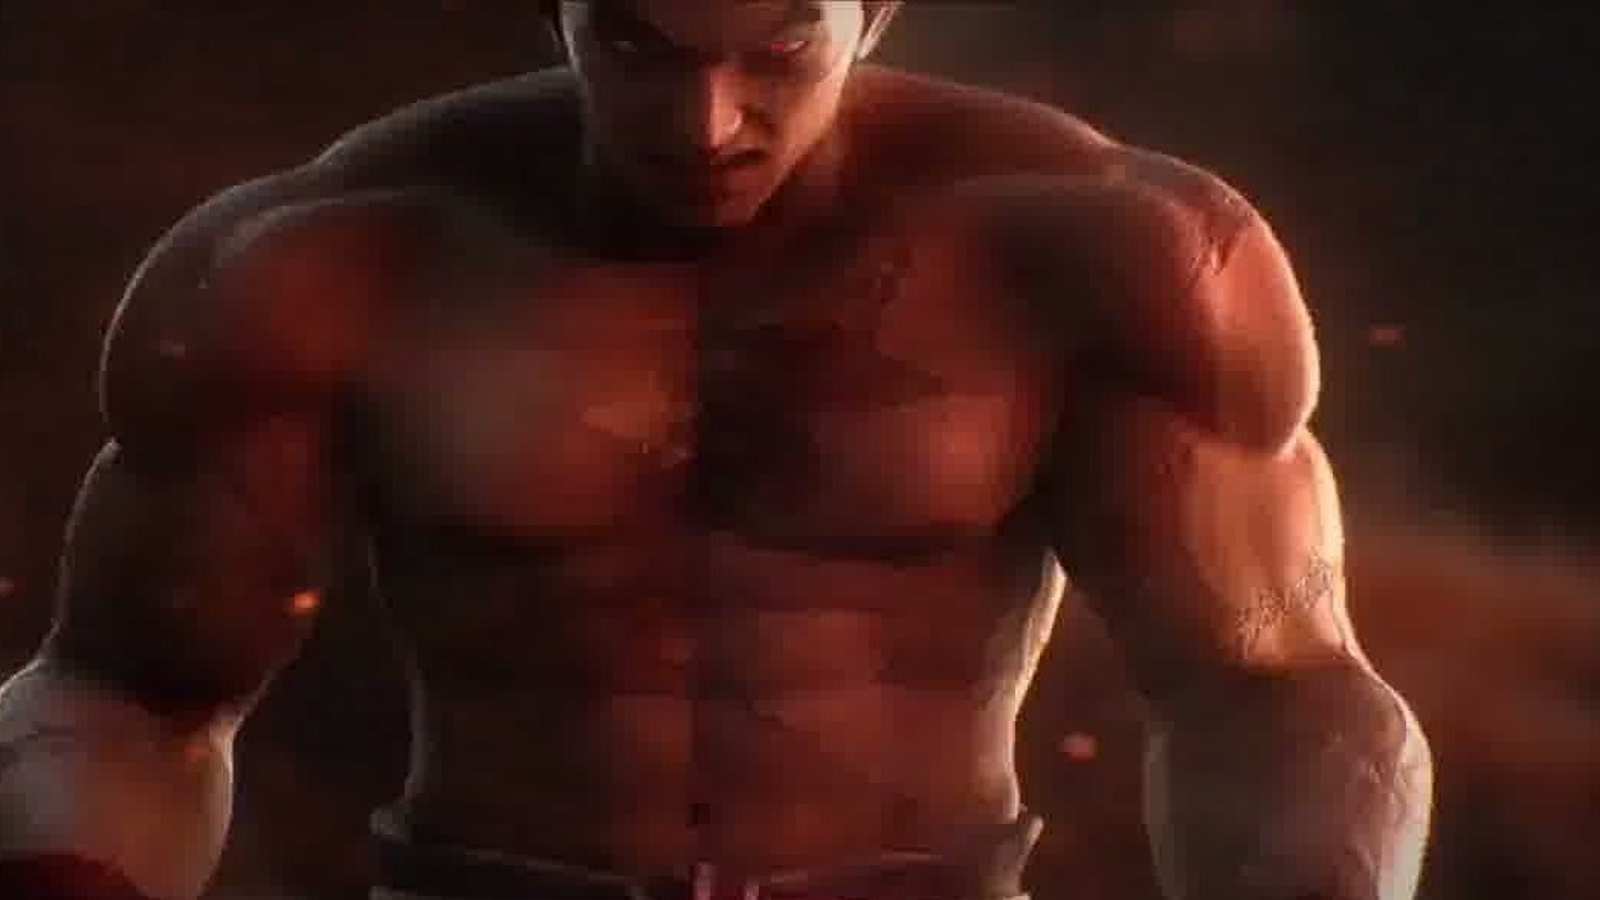 Tekken 7 - Vídeo de abertura mostra luta fantástica entre Kazuya e Heihachi!